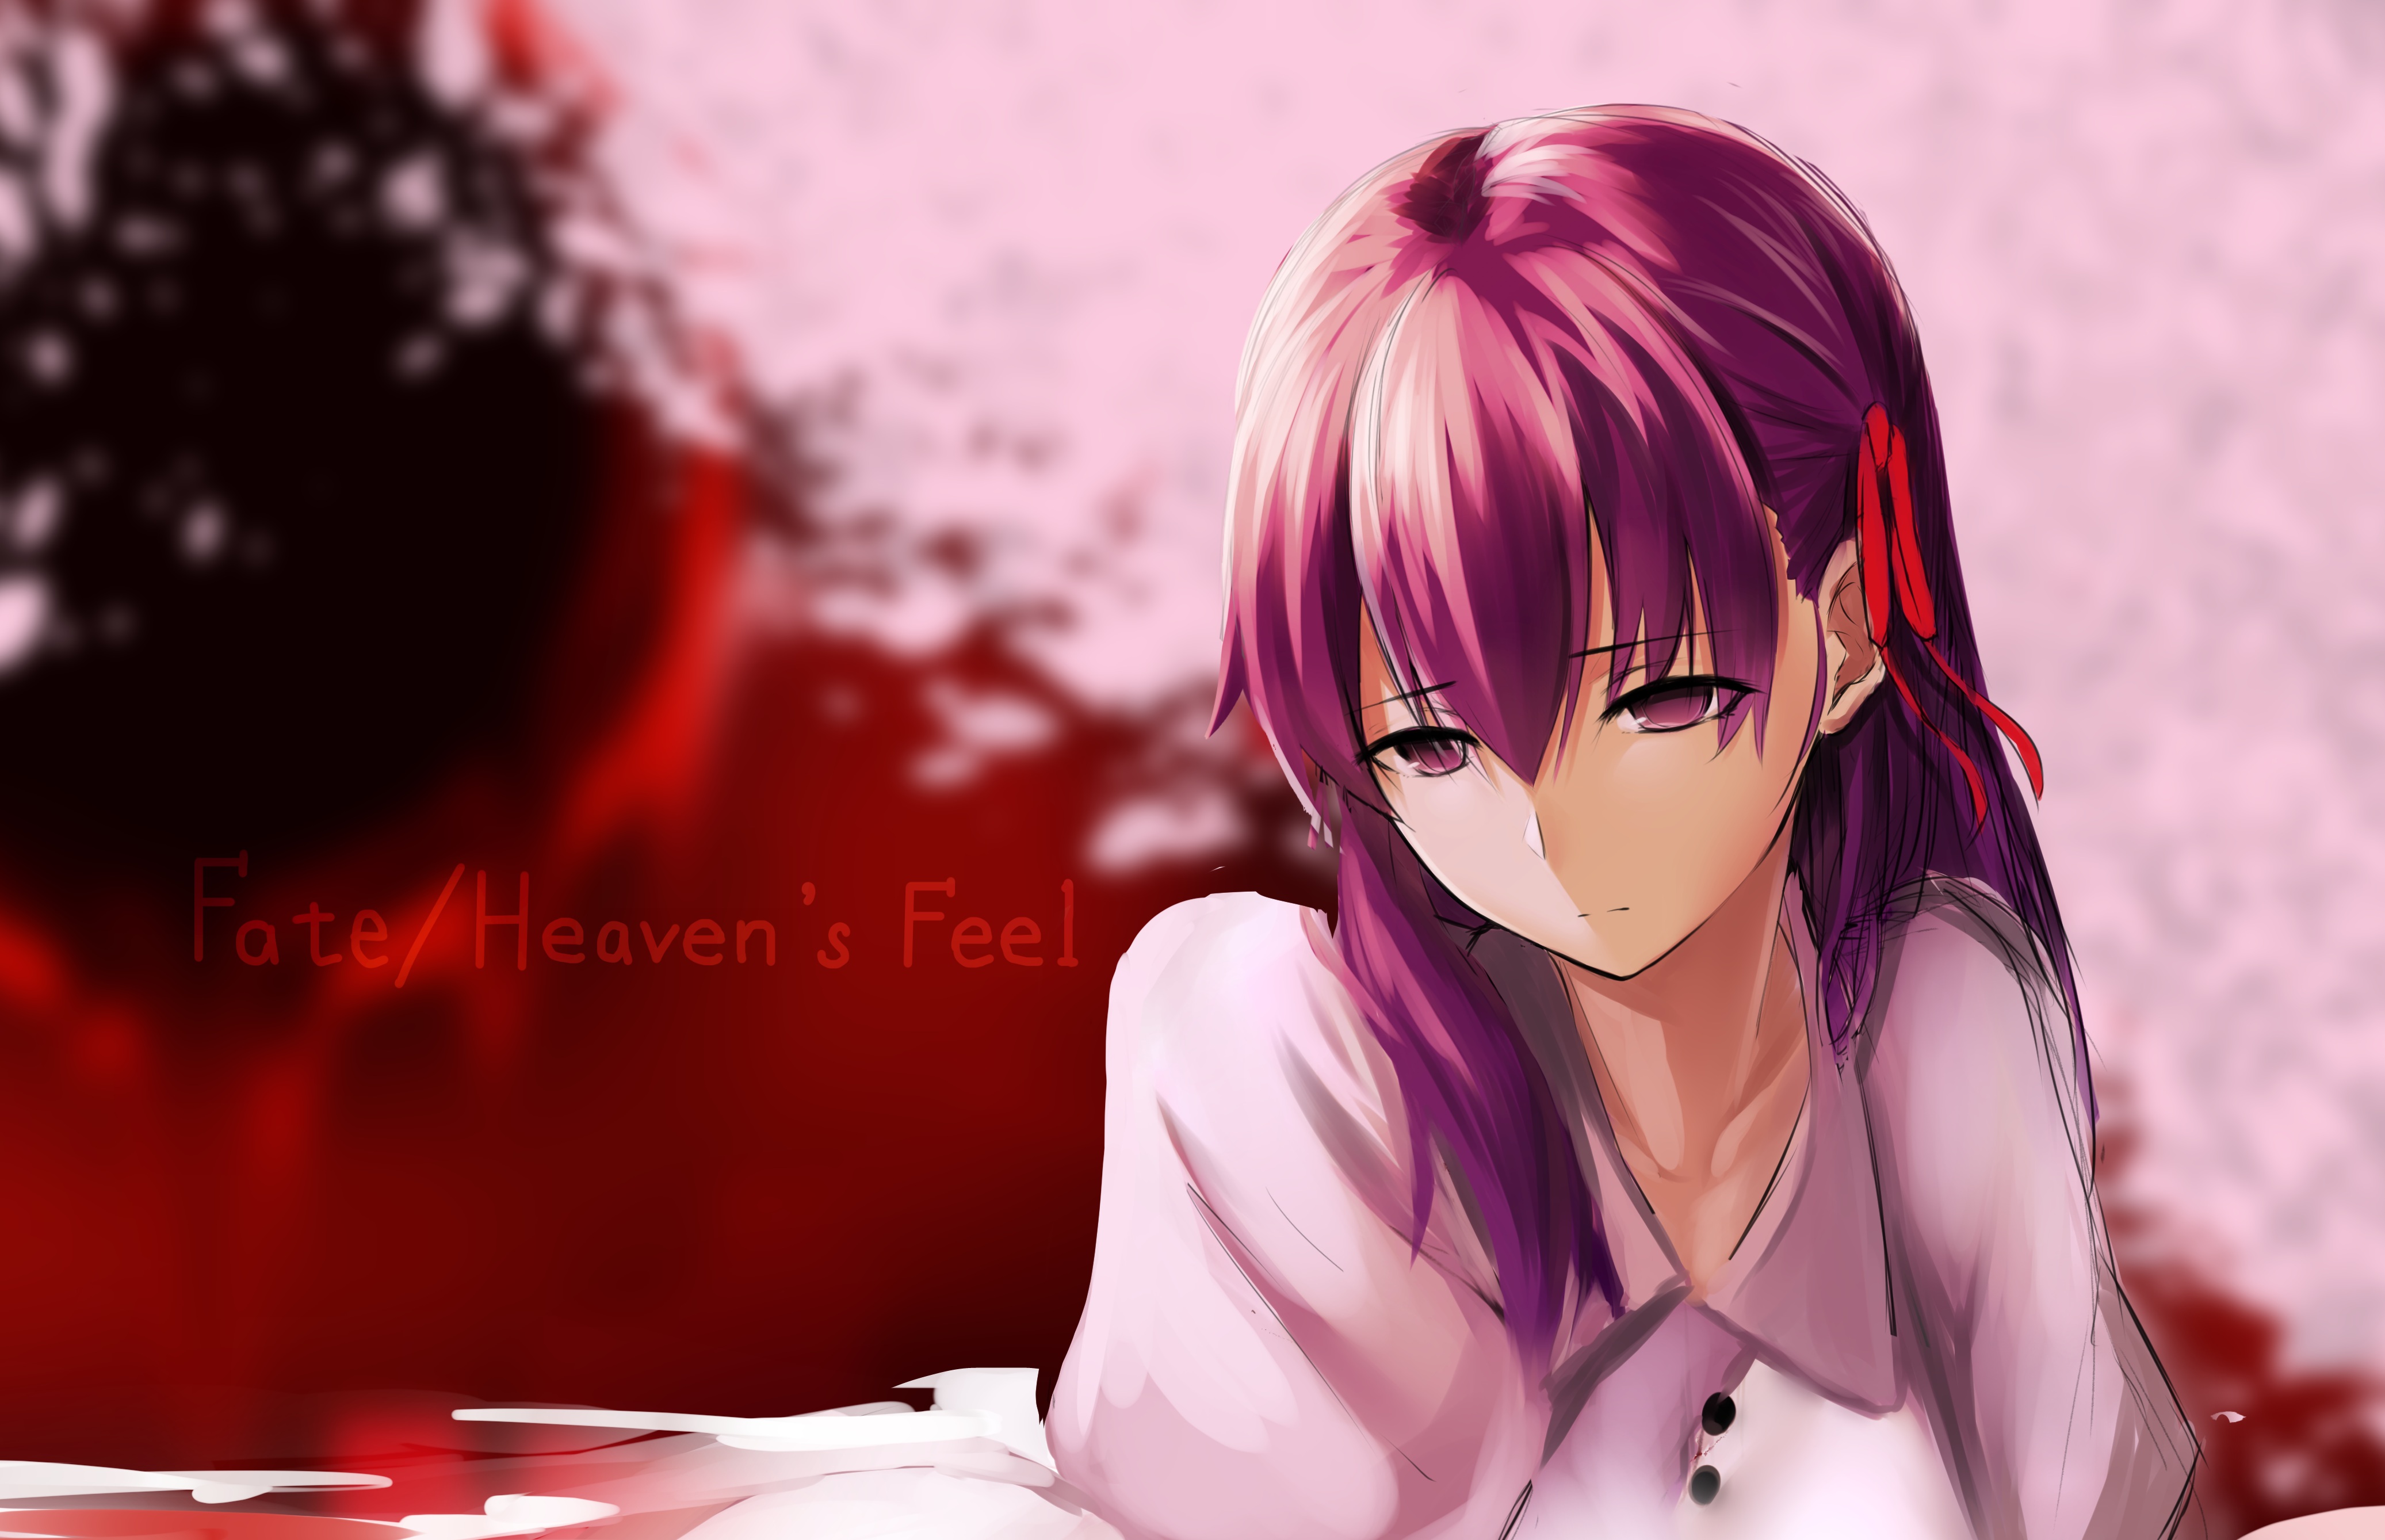 Descarga gratis la imagen Animado, Sakura Matou, Fate/stay Night Película: Heaven's Feel, Serie Del Destino en el escritorio de tu PC